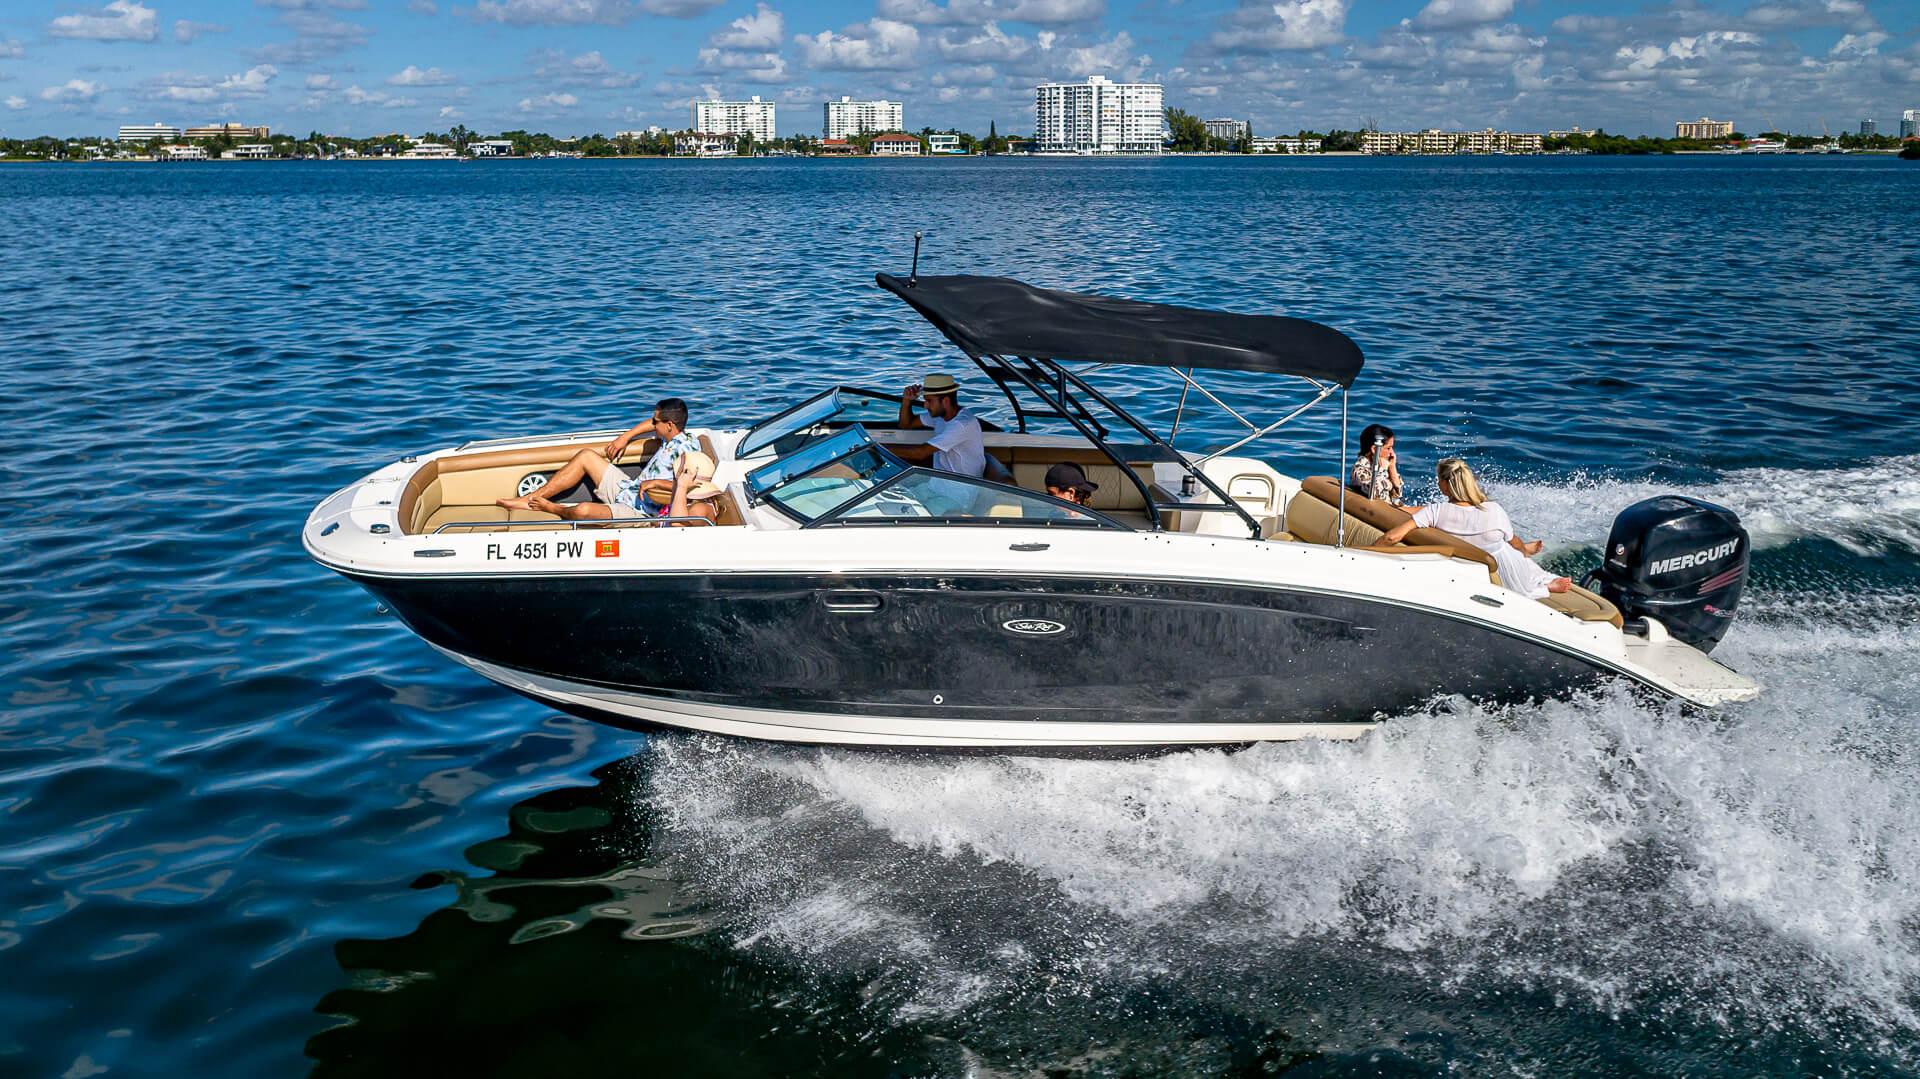 luxury giant boat pictures Miami,luxury giant boat pictures,boat pictures miami